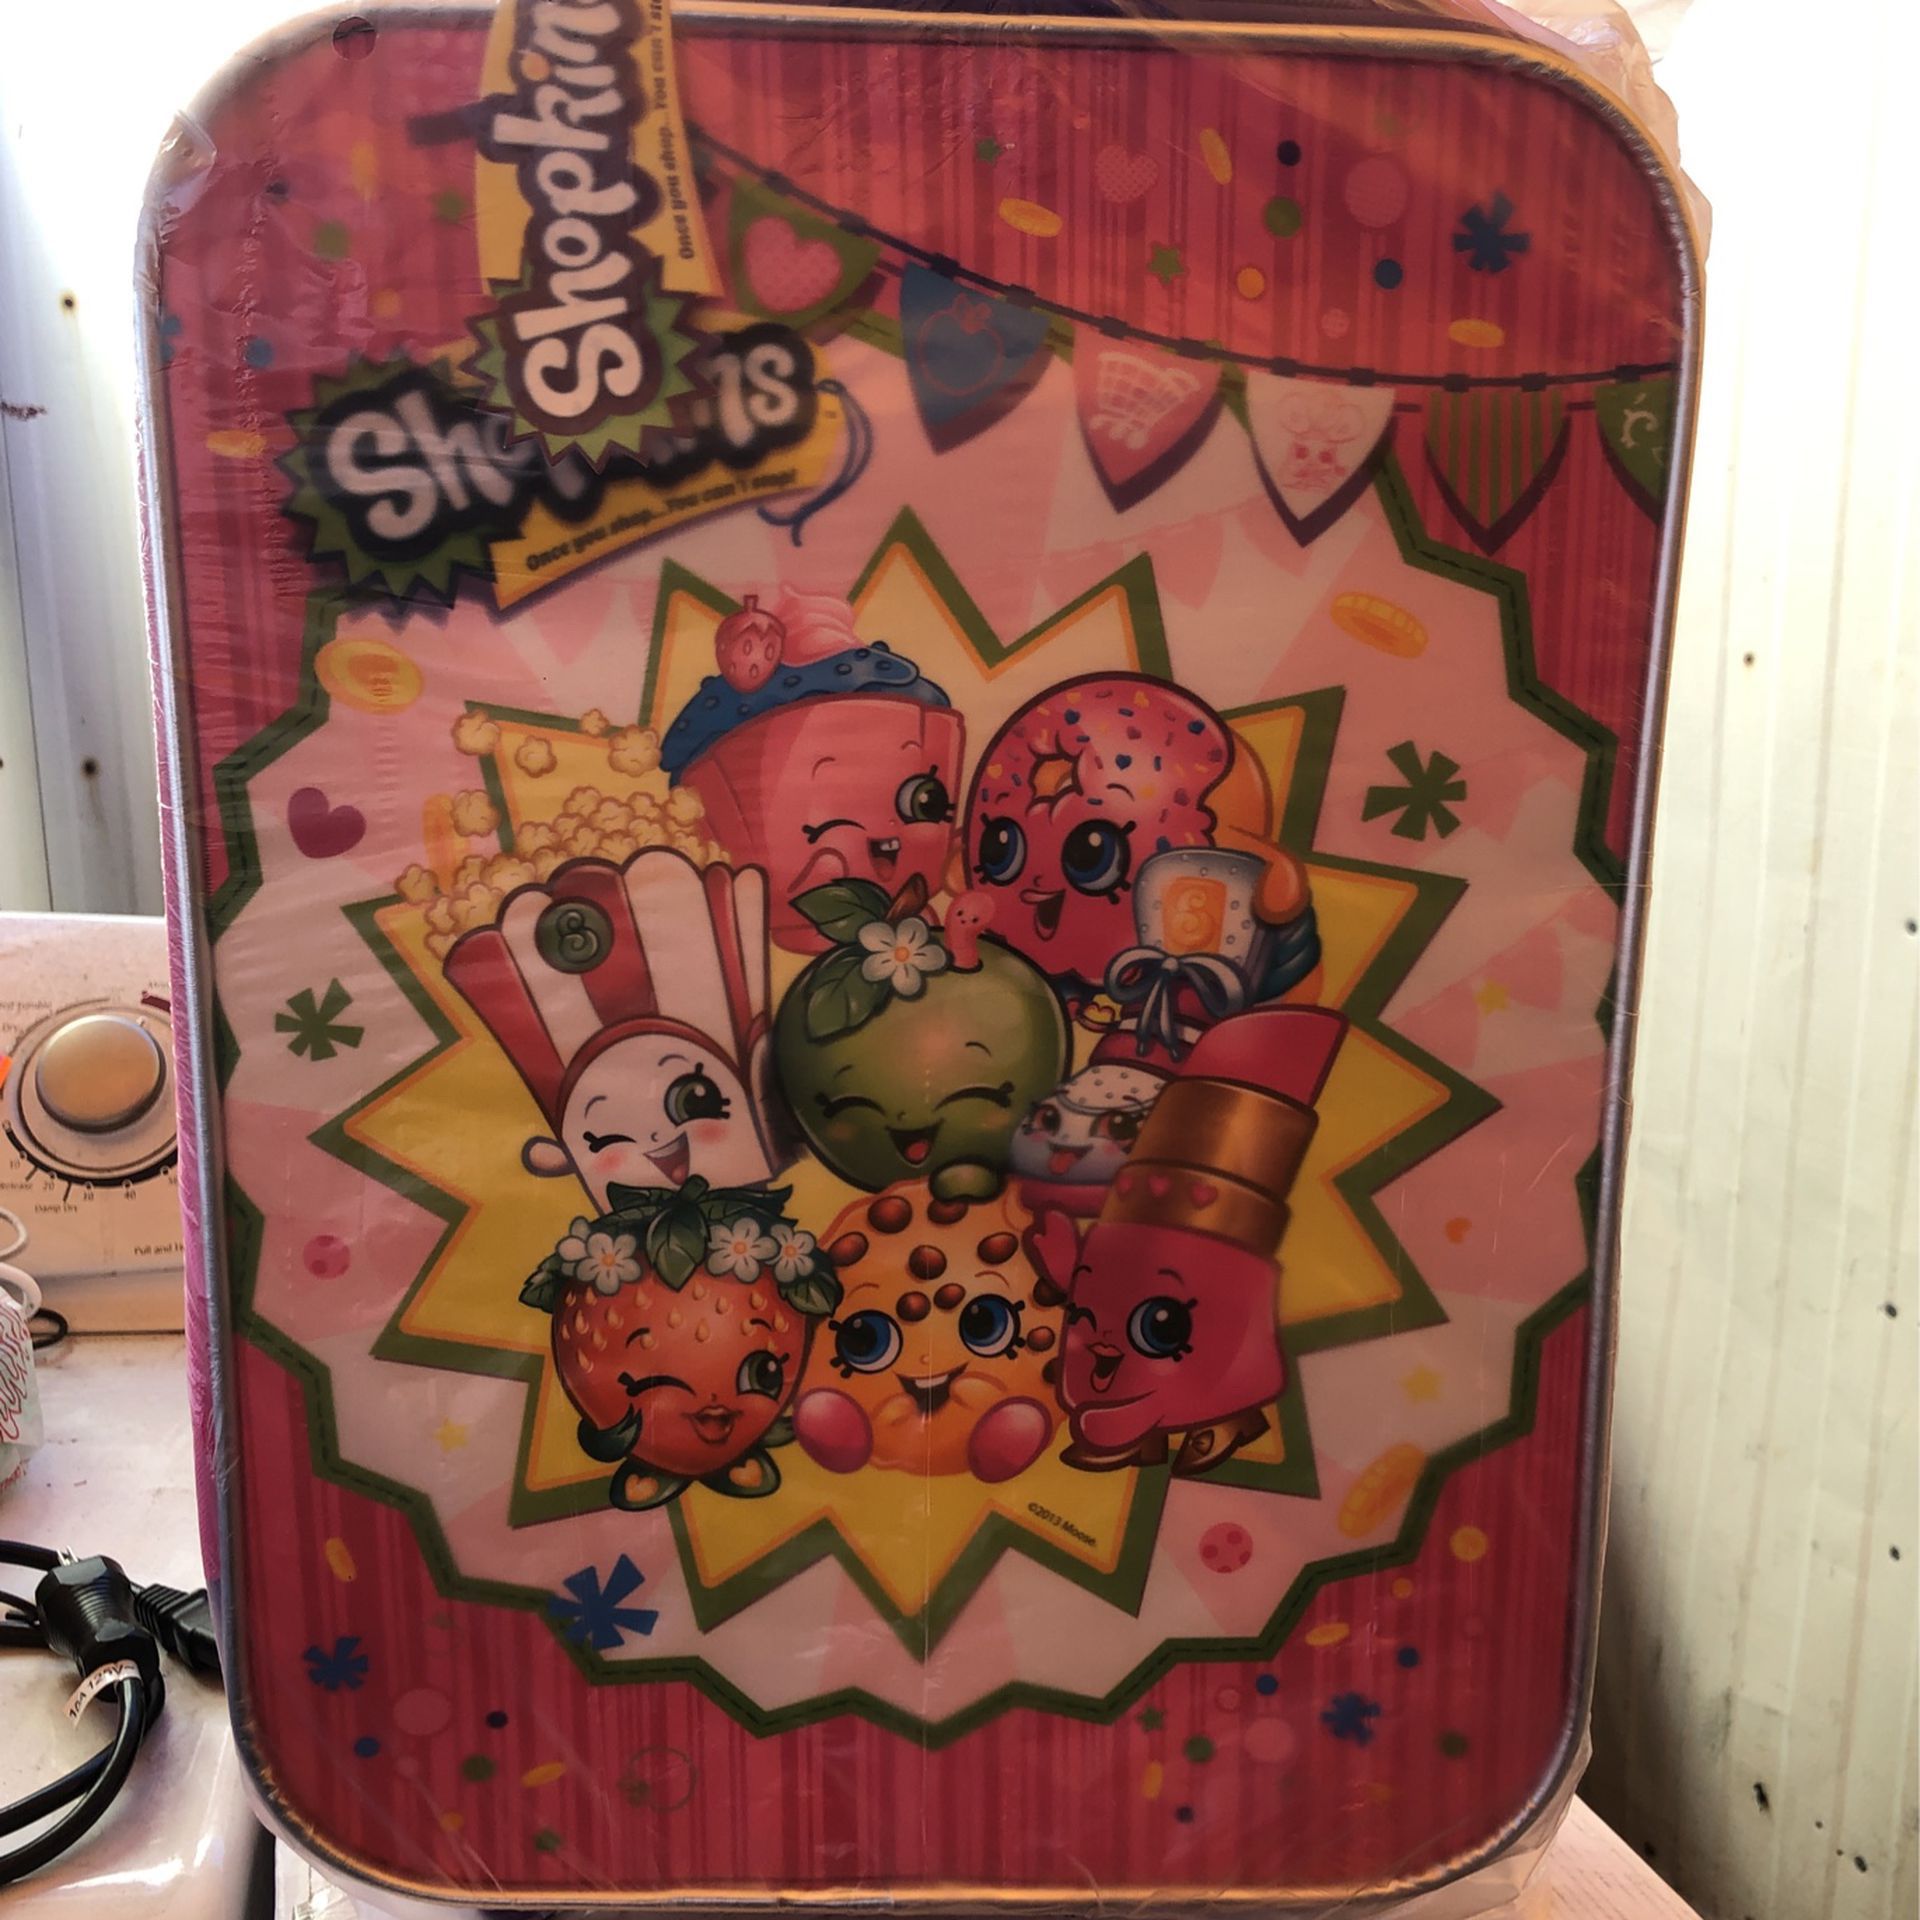 New! Disney Luggages